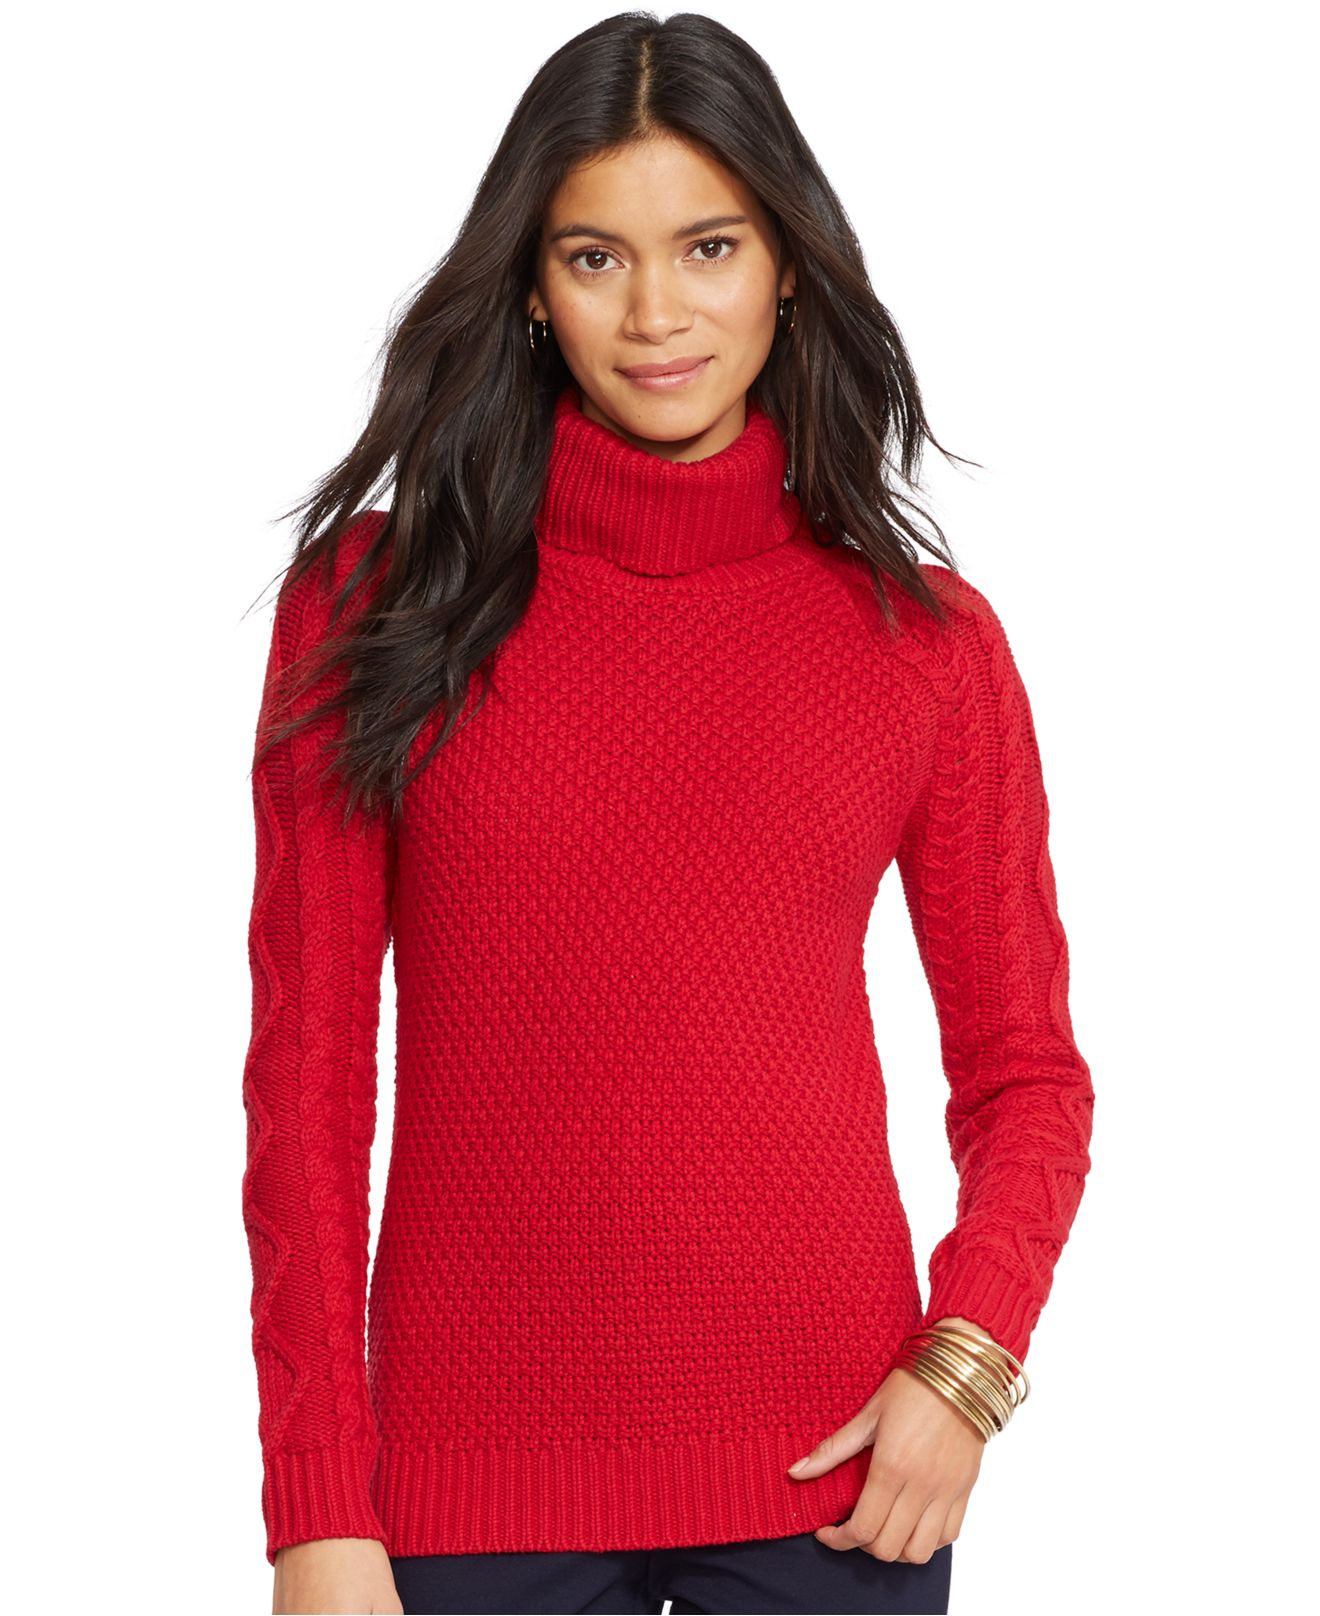 Lyst - Lauren By Ralph Lauren Cable-Knit Turtleneck Sweater in Red